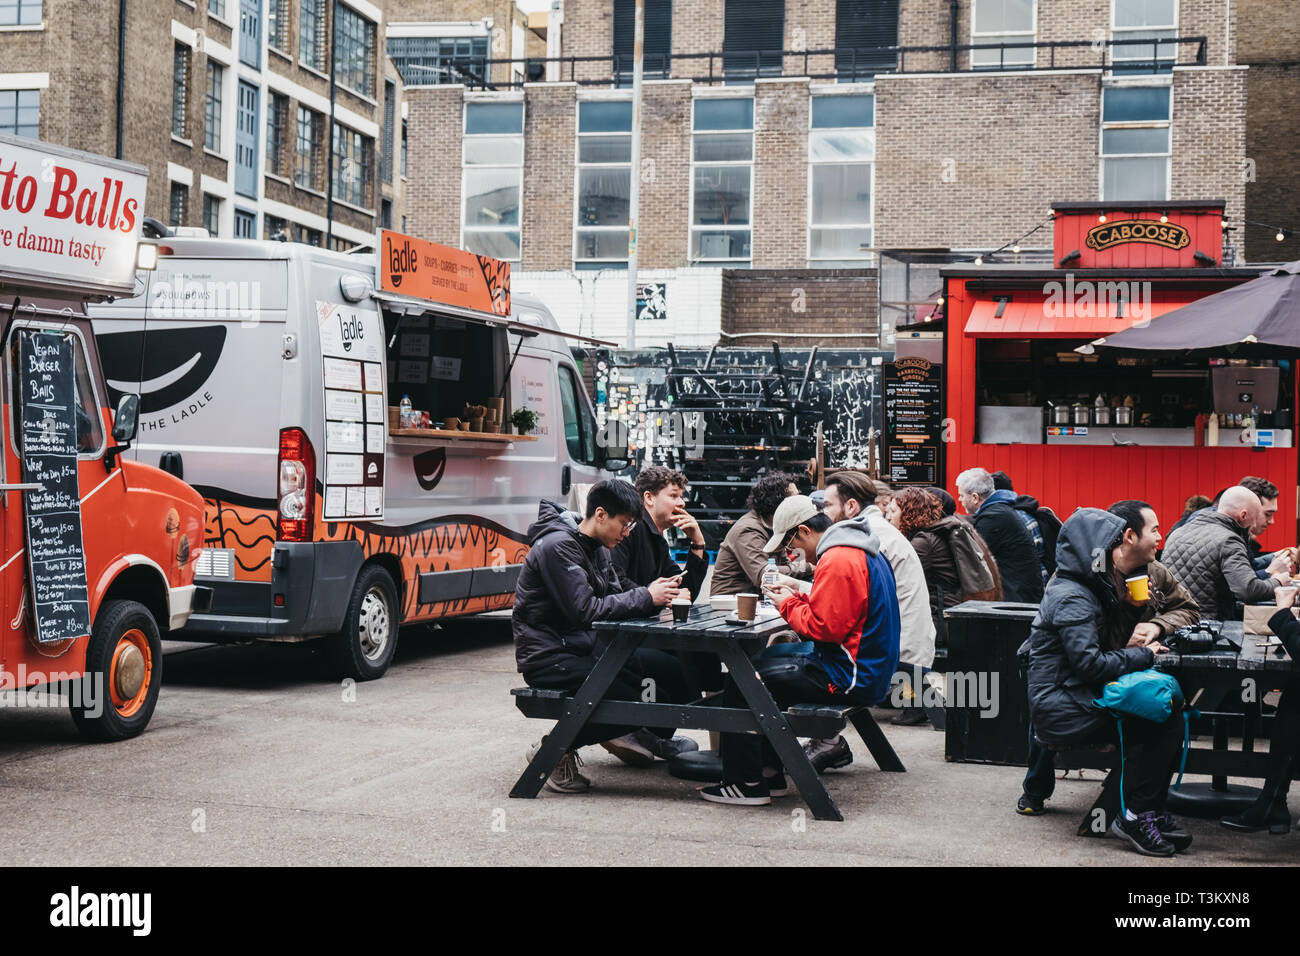 London, UK - April 6, 2019: People enjoying street food in Ely's Yard, a popular industrial-style street food market just off Brick Lane, East London. Stock Photo